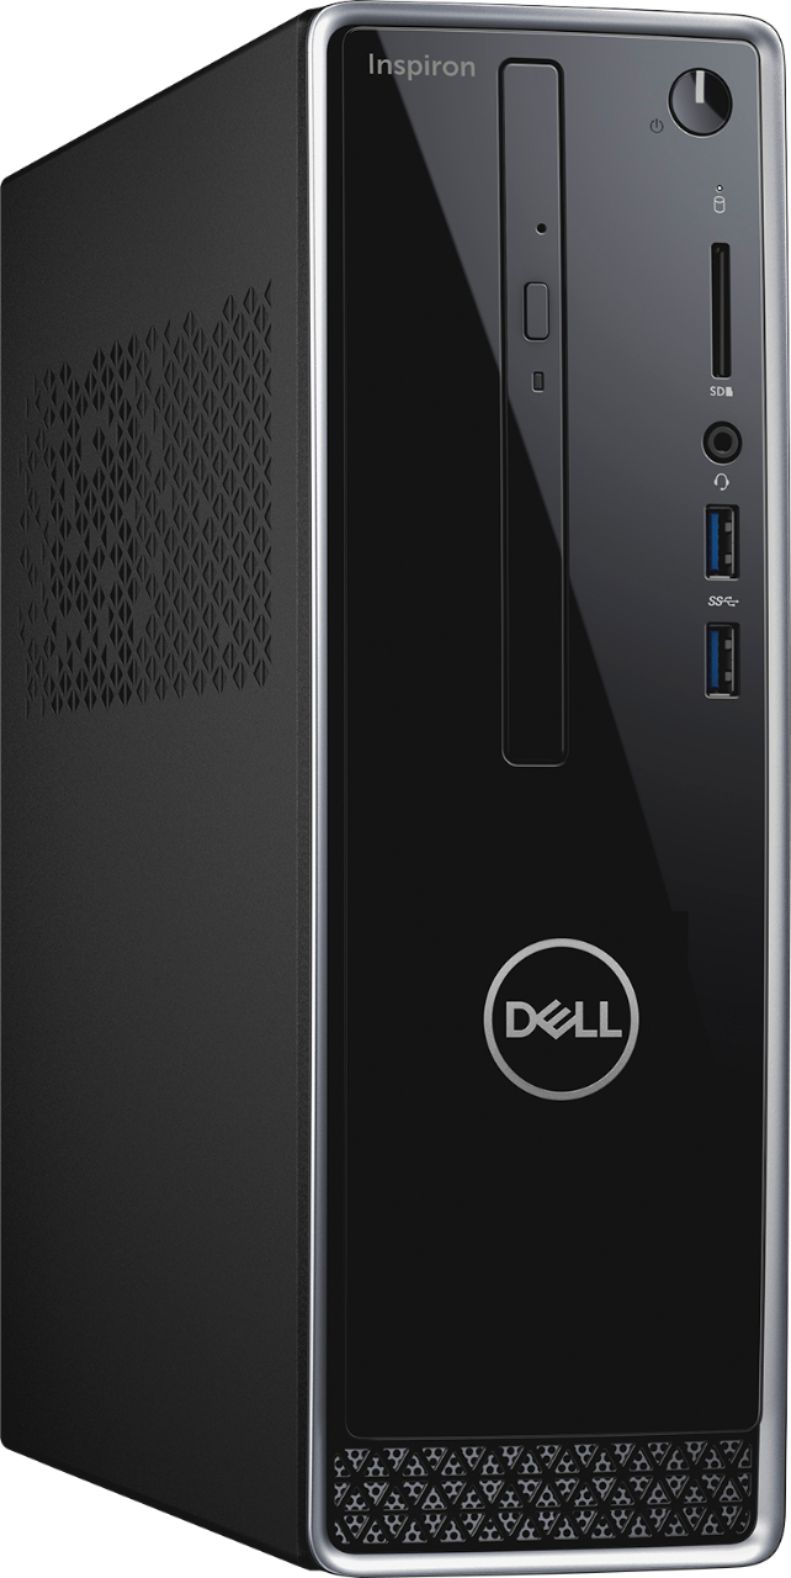 Dell Inspiron Desktop Intel Core i3 8GB Memory - Best Buy